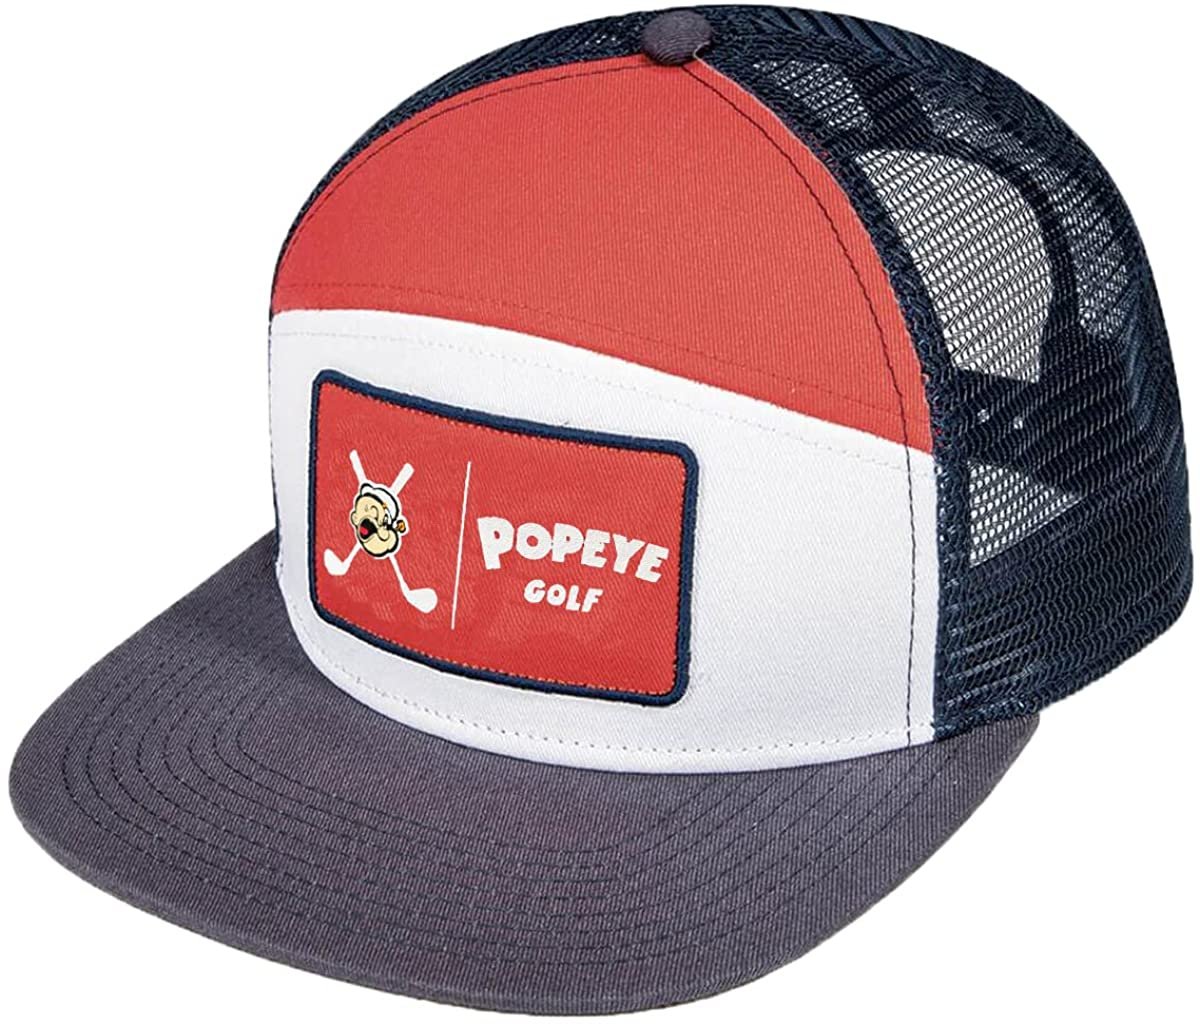 Popeye Golf Tradesman Mesh Adjustable Snapback Hat Trucker